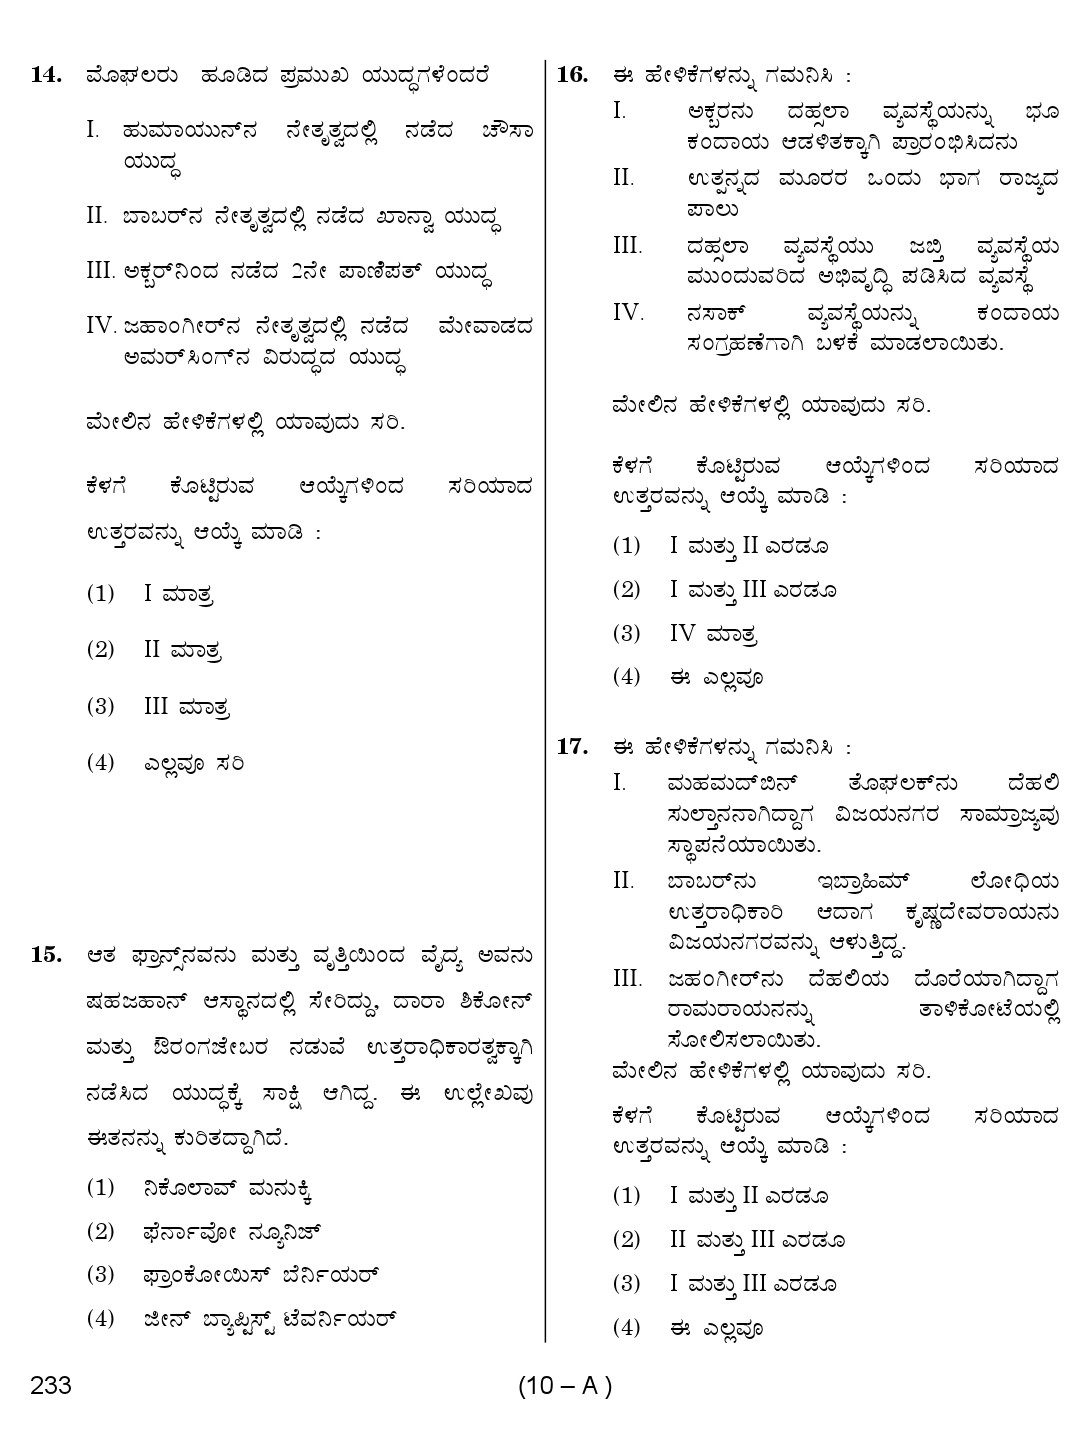 Karnataka PSC History Teacher Exam Sample Question Paper Subject code 233 10